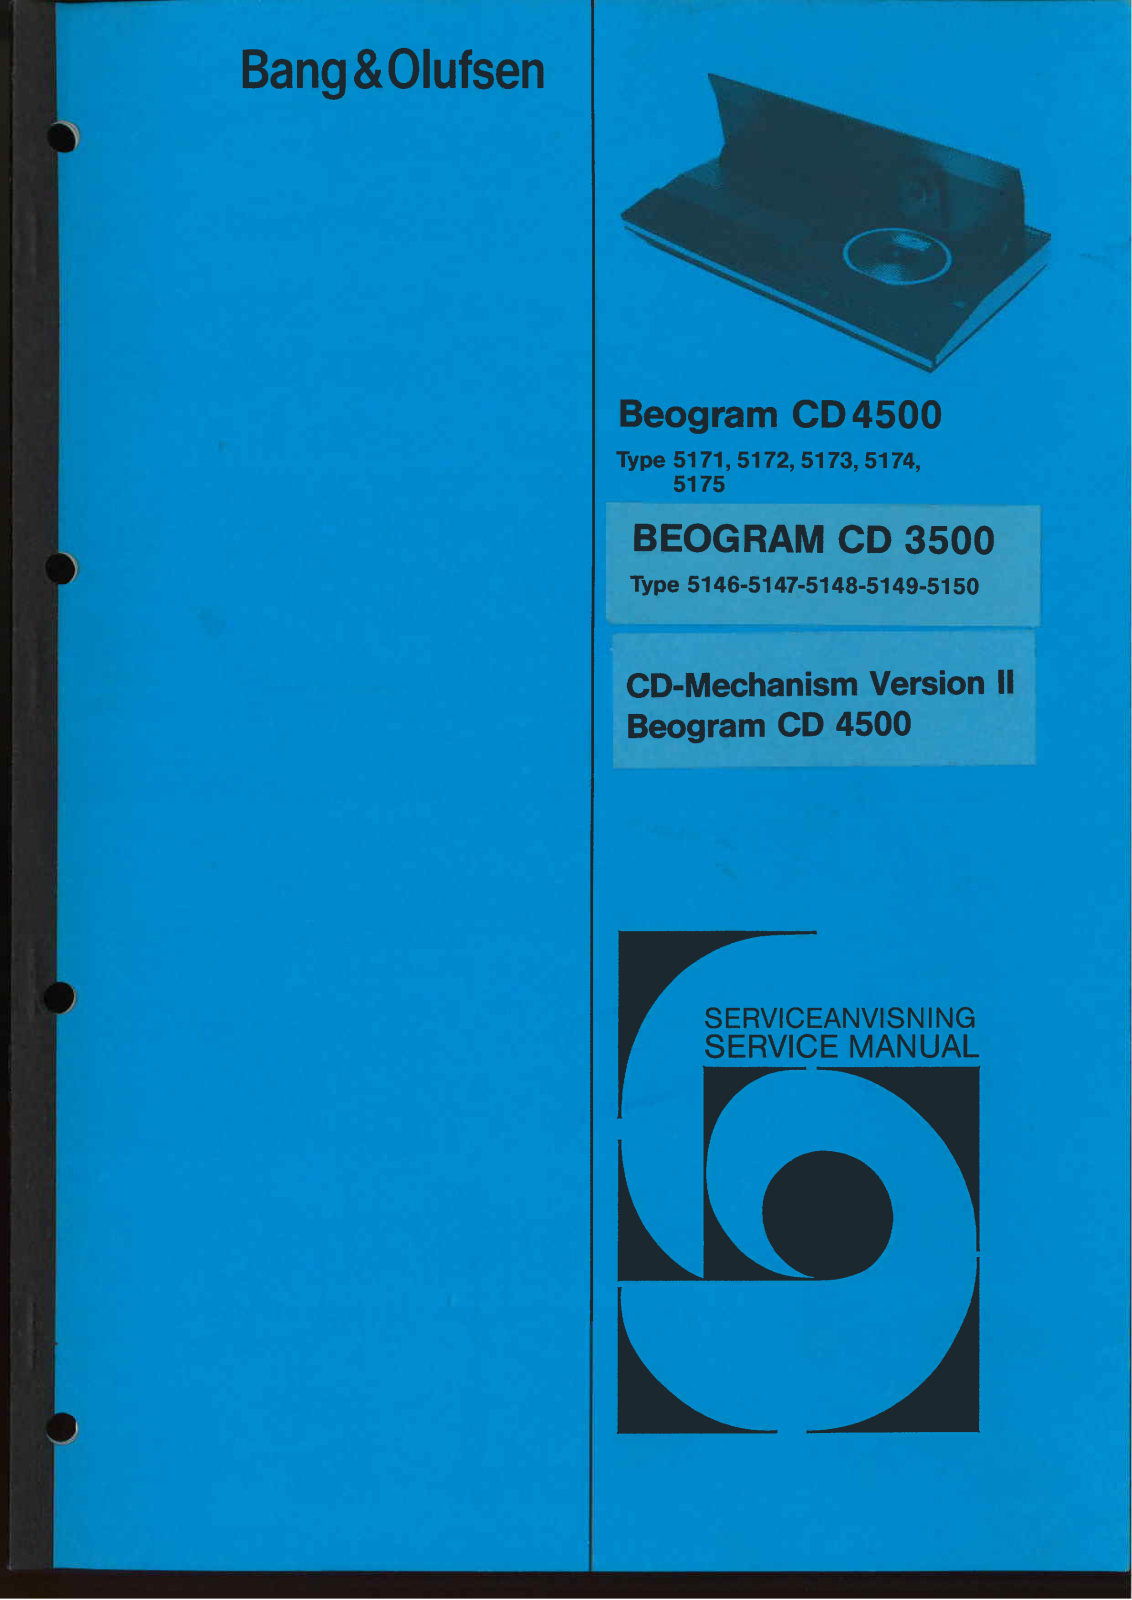 Bang & Olufsen Beogram CD-4500 Service Manual